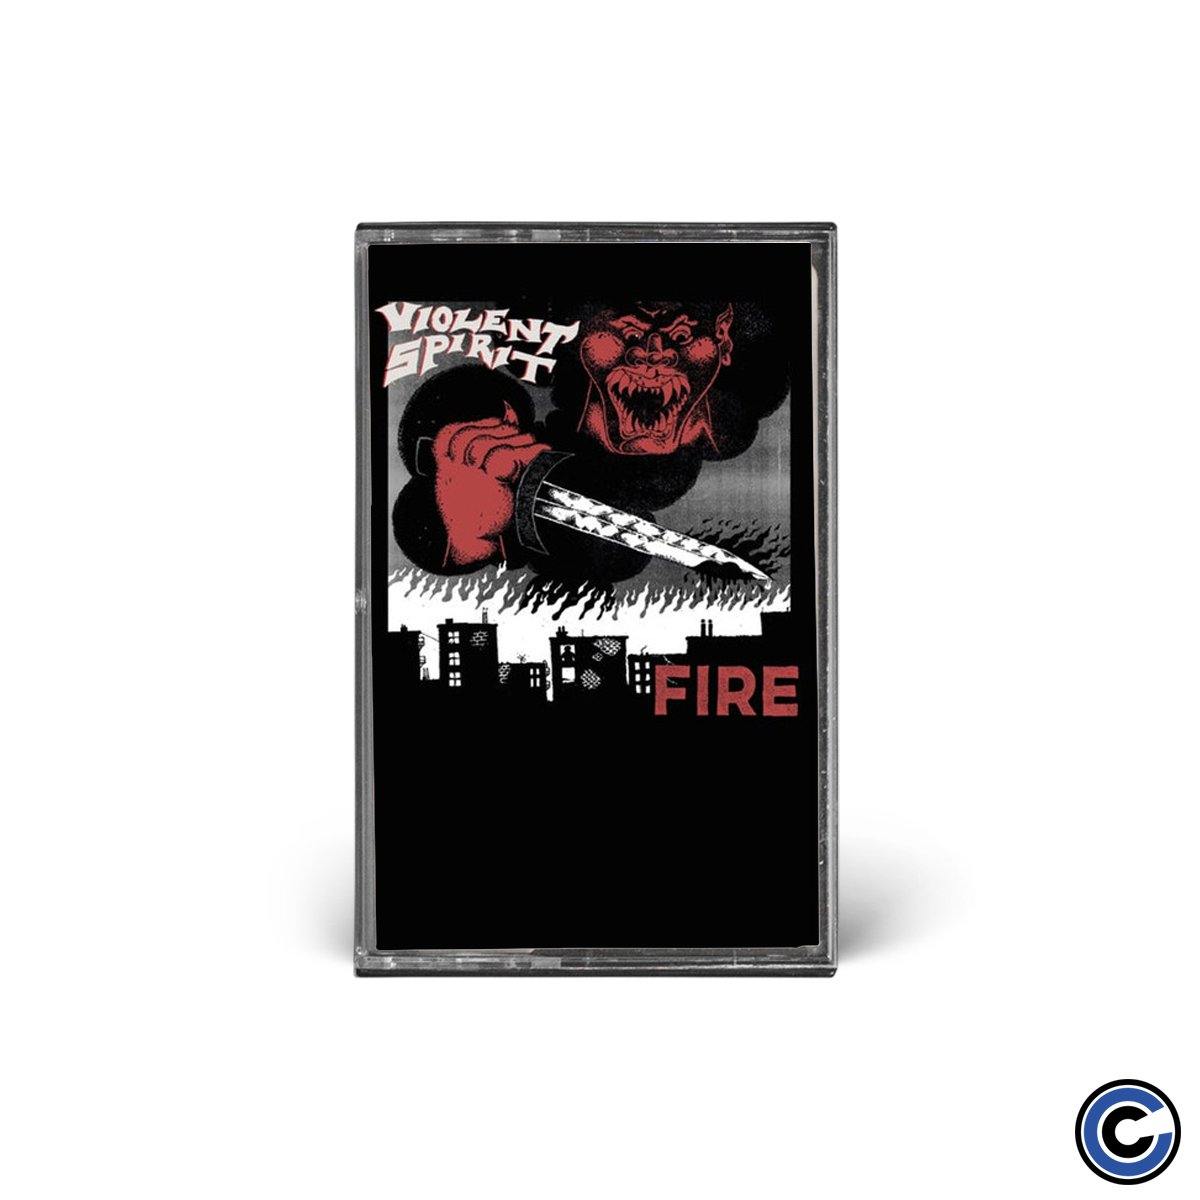 Buy – Violent Spirit "Fire" Cassette – Band & Music Merch – Cold Cuts Merch